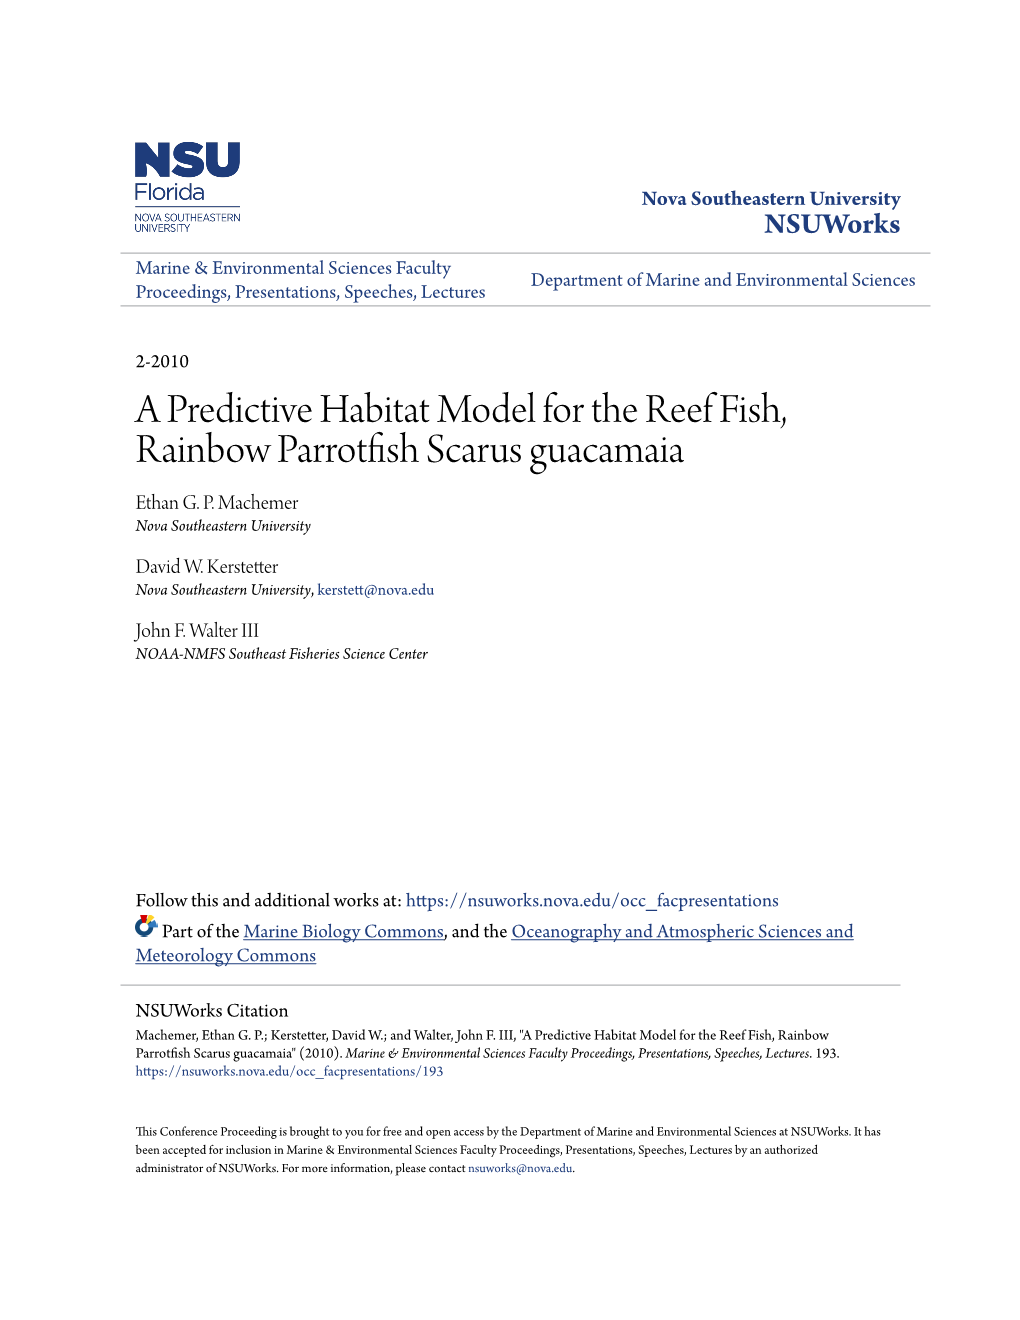 A Predictive Habitat Model for the Reef Fish, Rainbow Parrotfish Scarus Guacamaia Ethan G